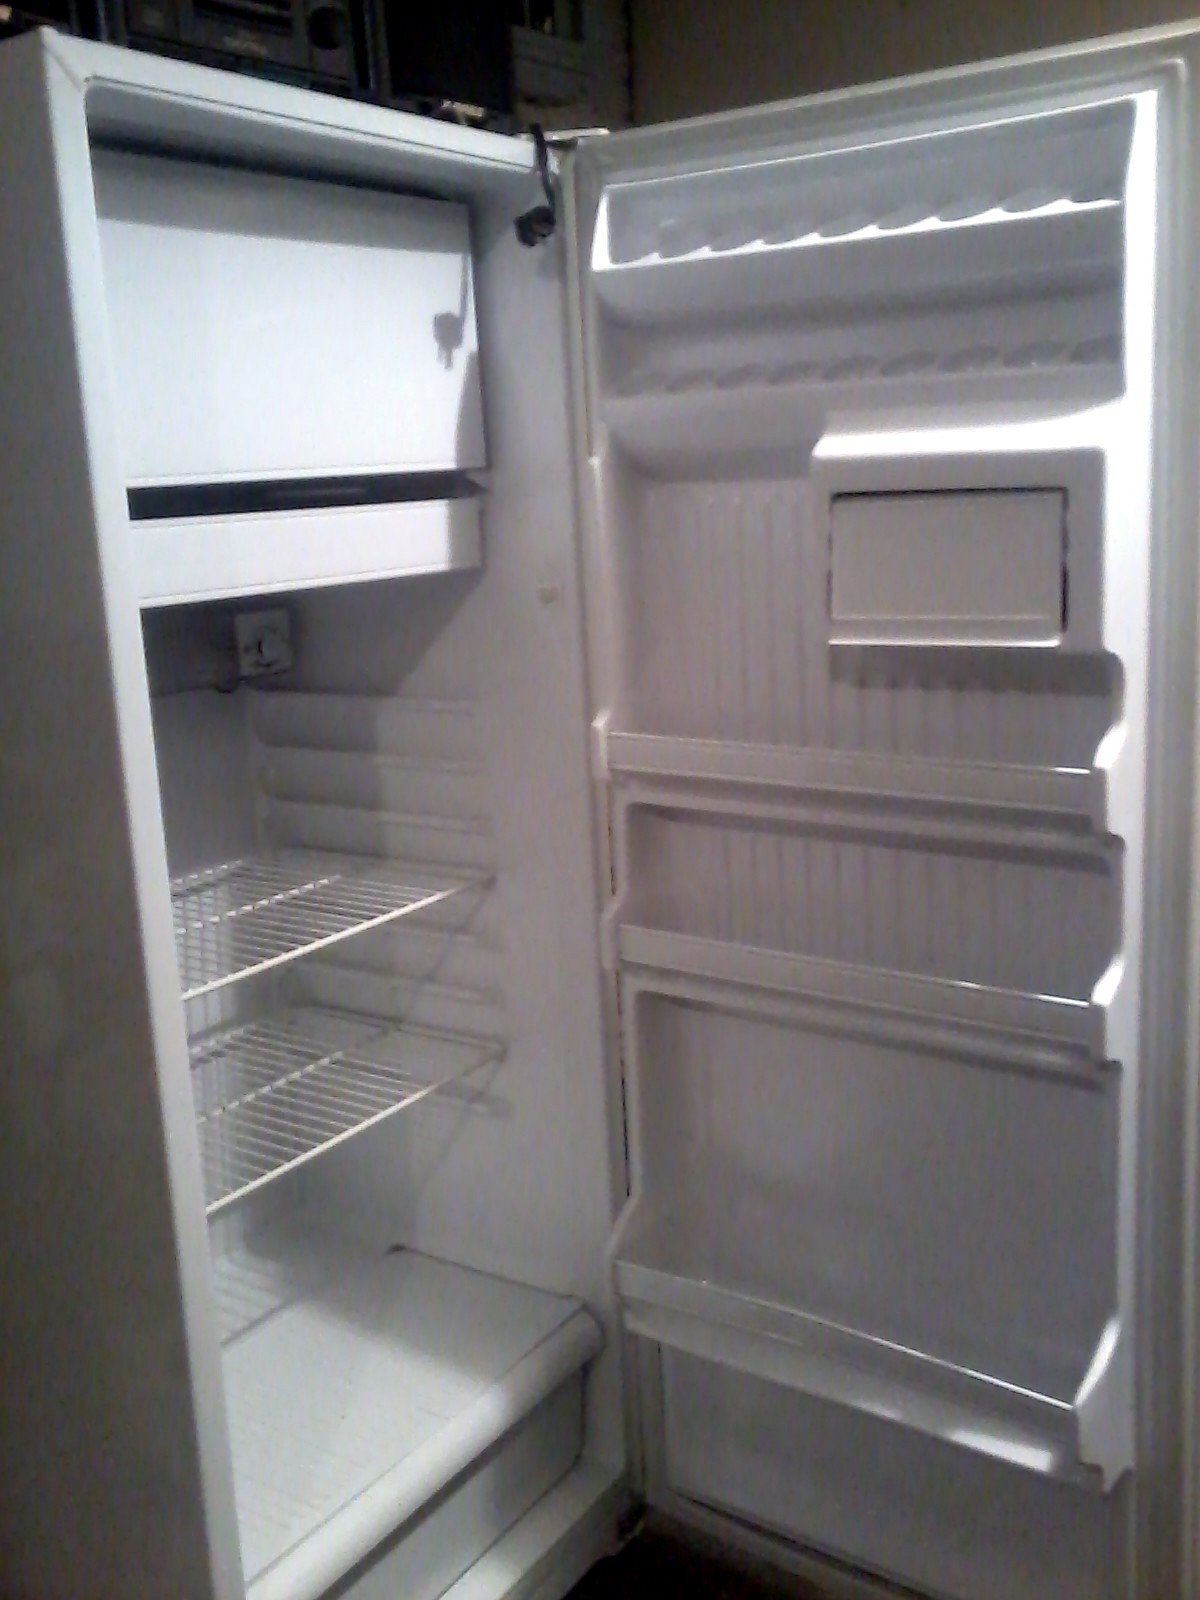 Apt.sized Refrigerater